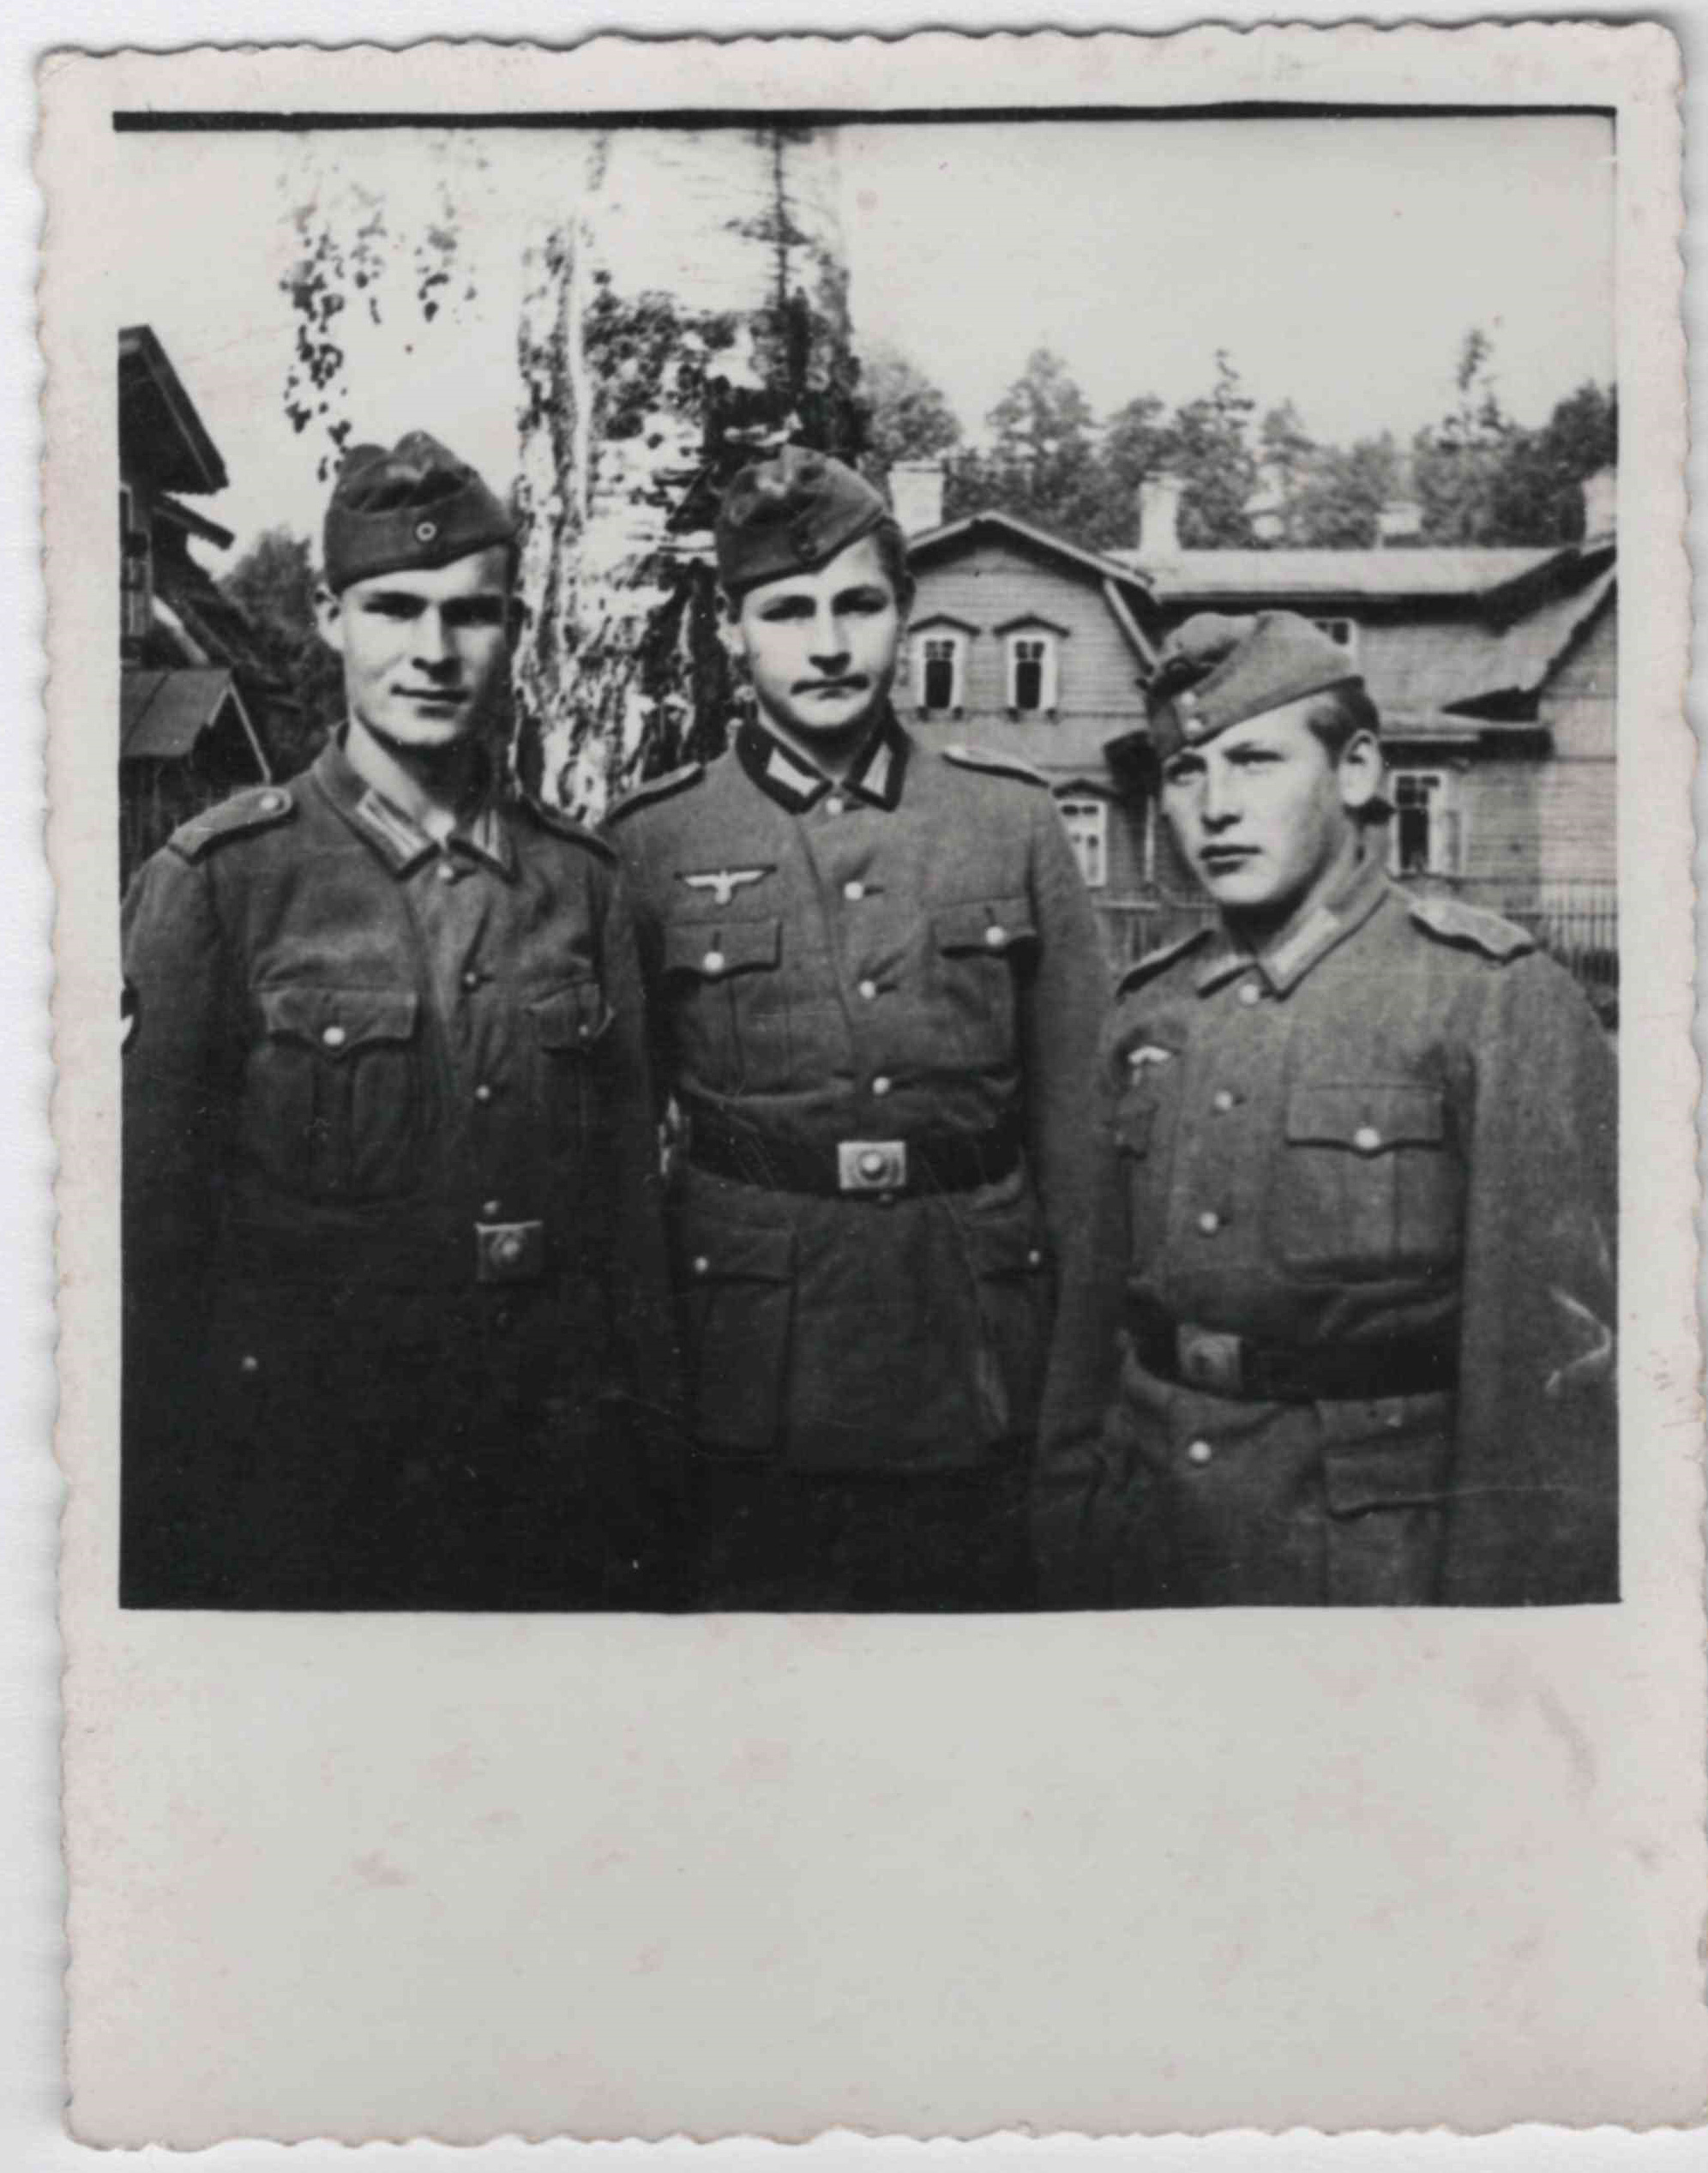 Kirimäe boys in the German army